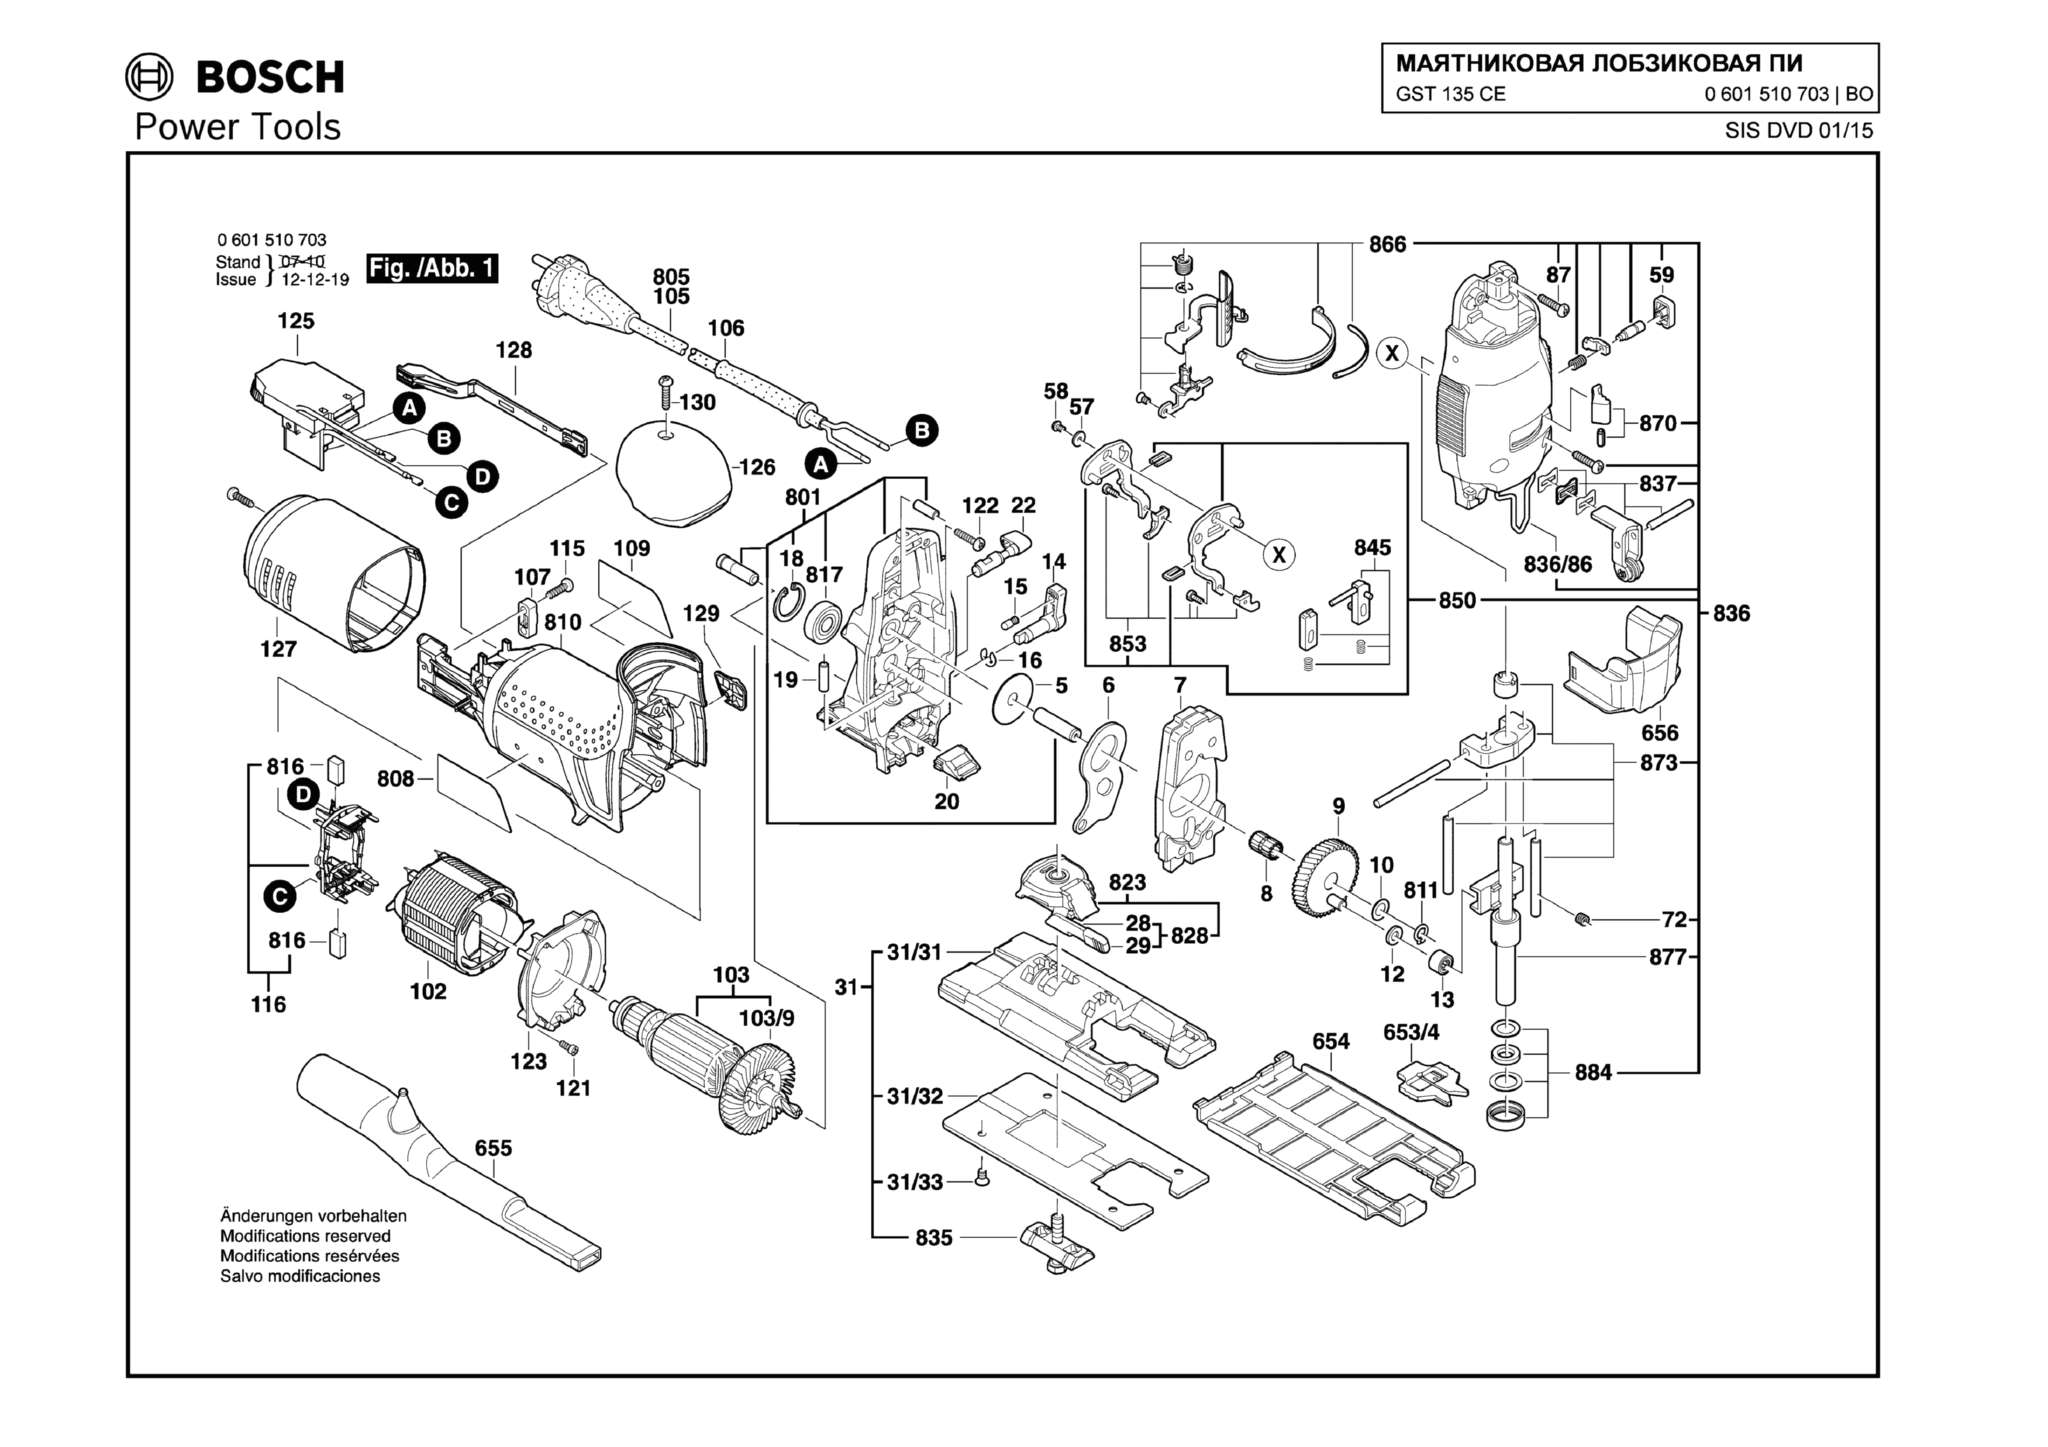 Запчасти, схема и деталировка Bosch GST 135 CE (ТИП 0601510703)